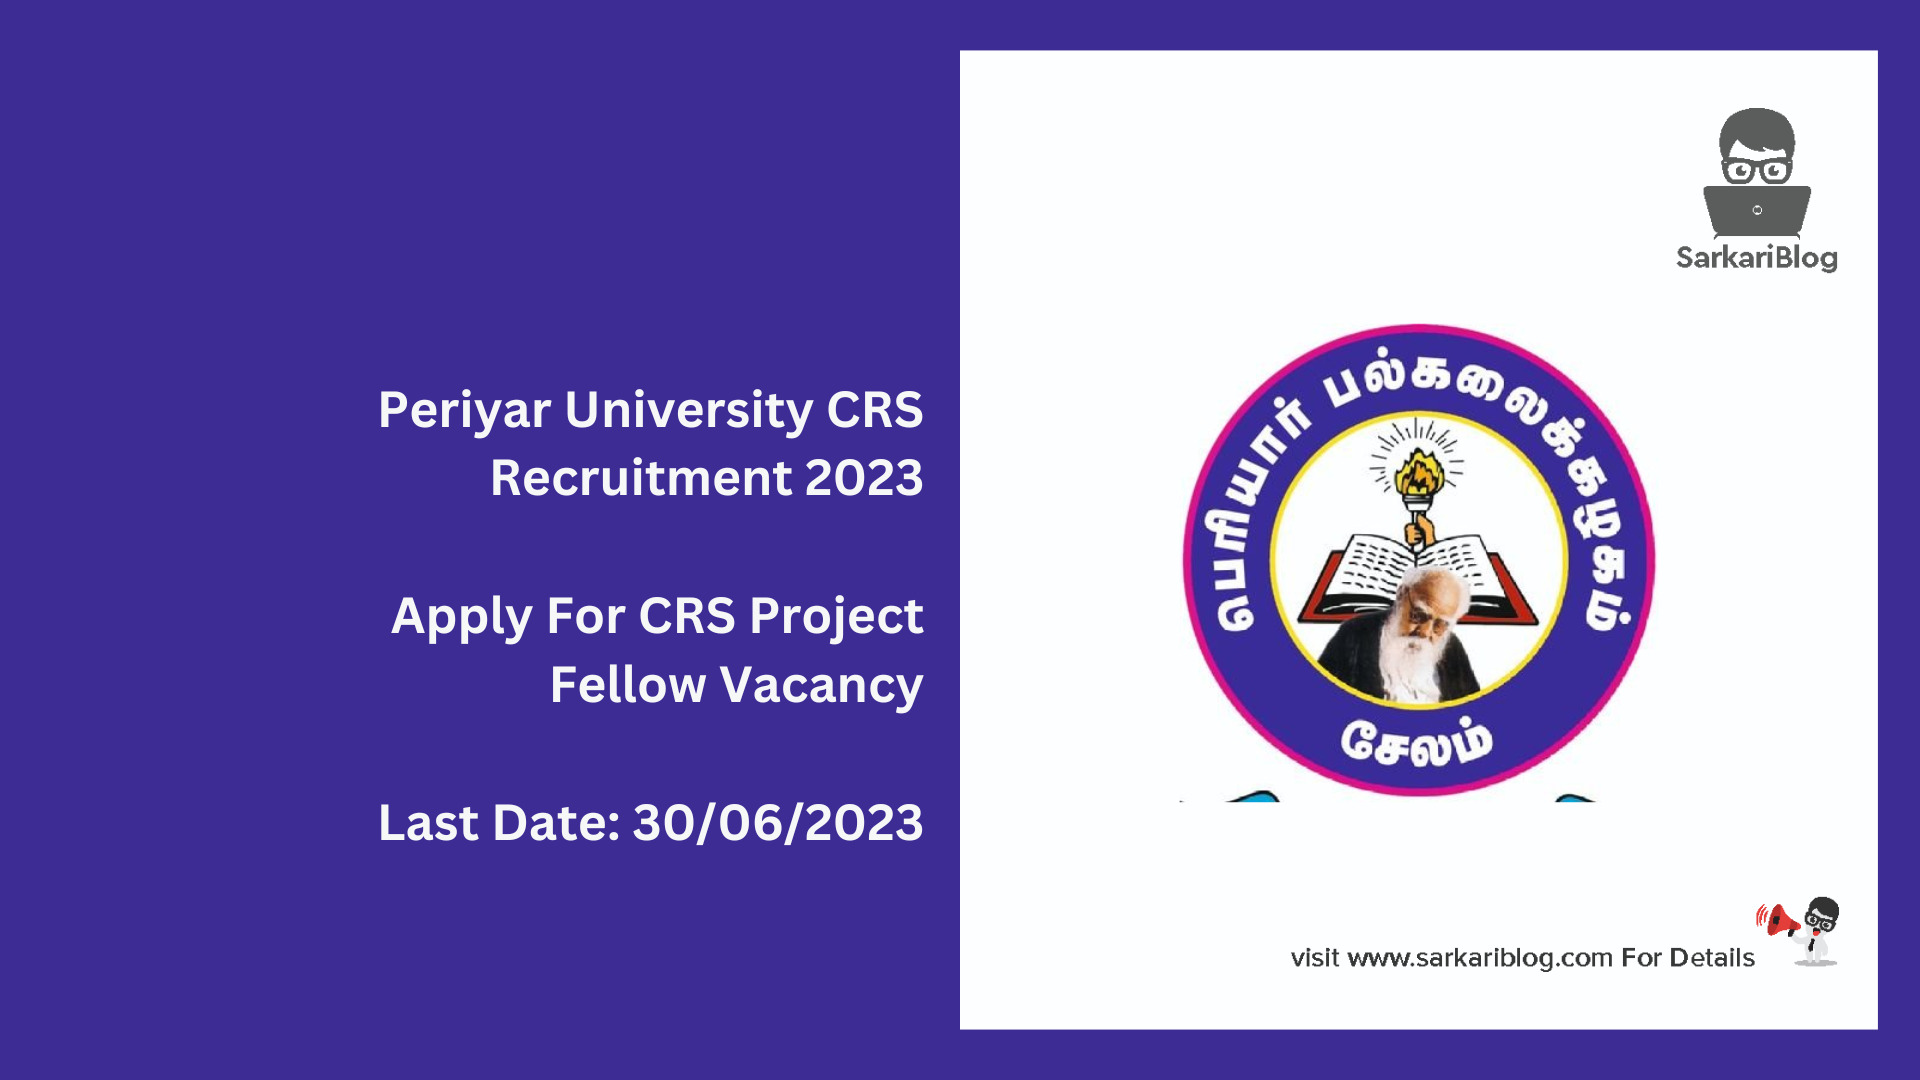 Periyar University CRS Recruitment 2023